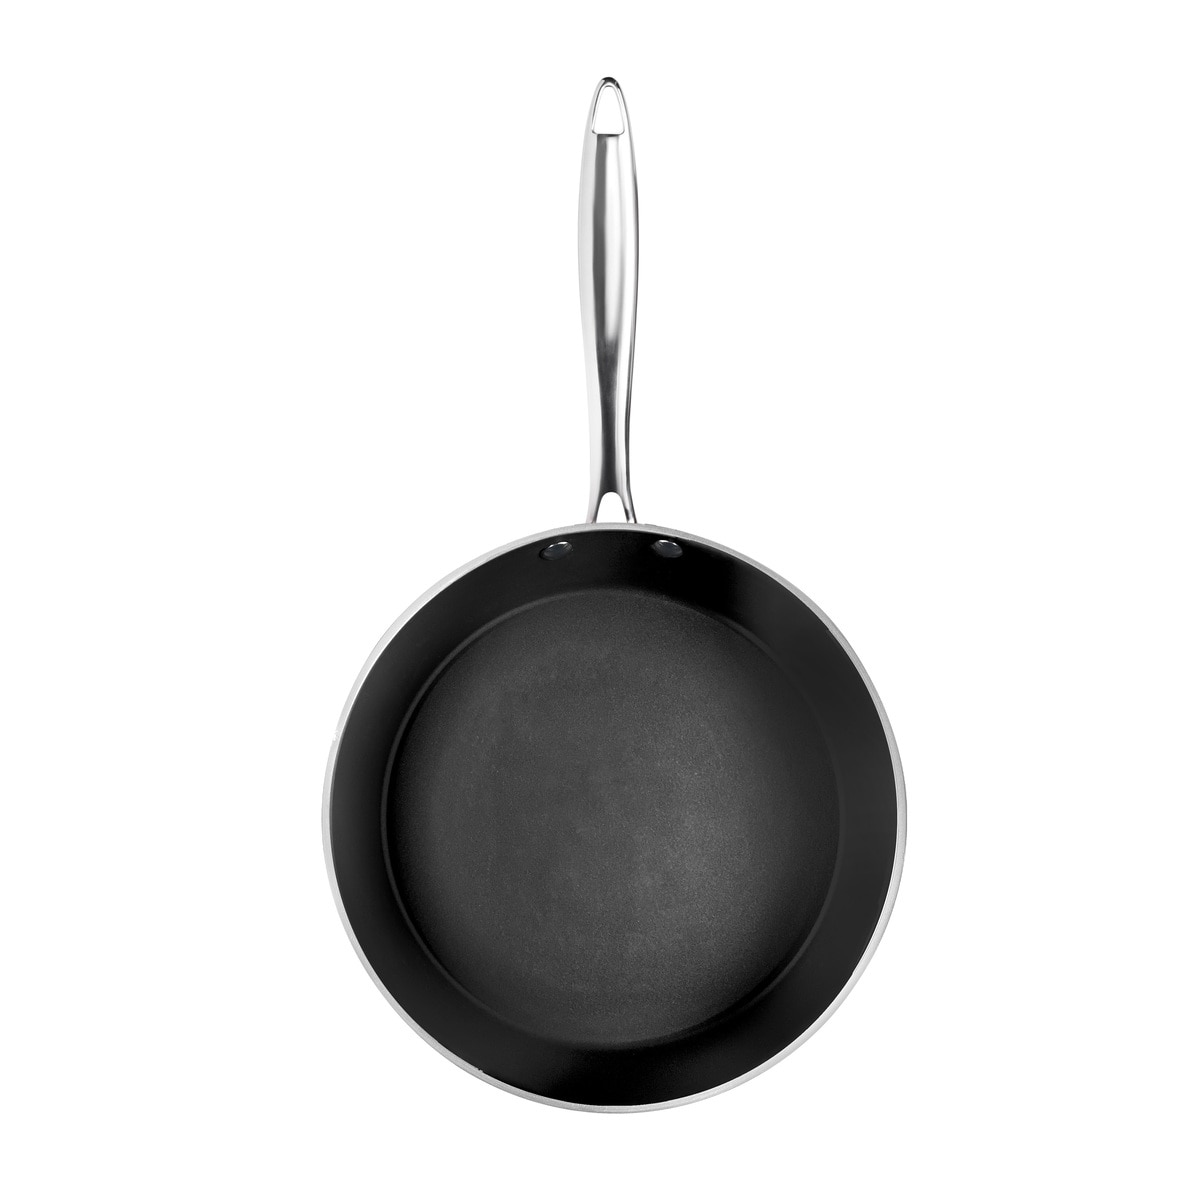 12 Original Orgreenic Non-Stick Square Frying Pan